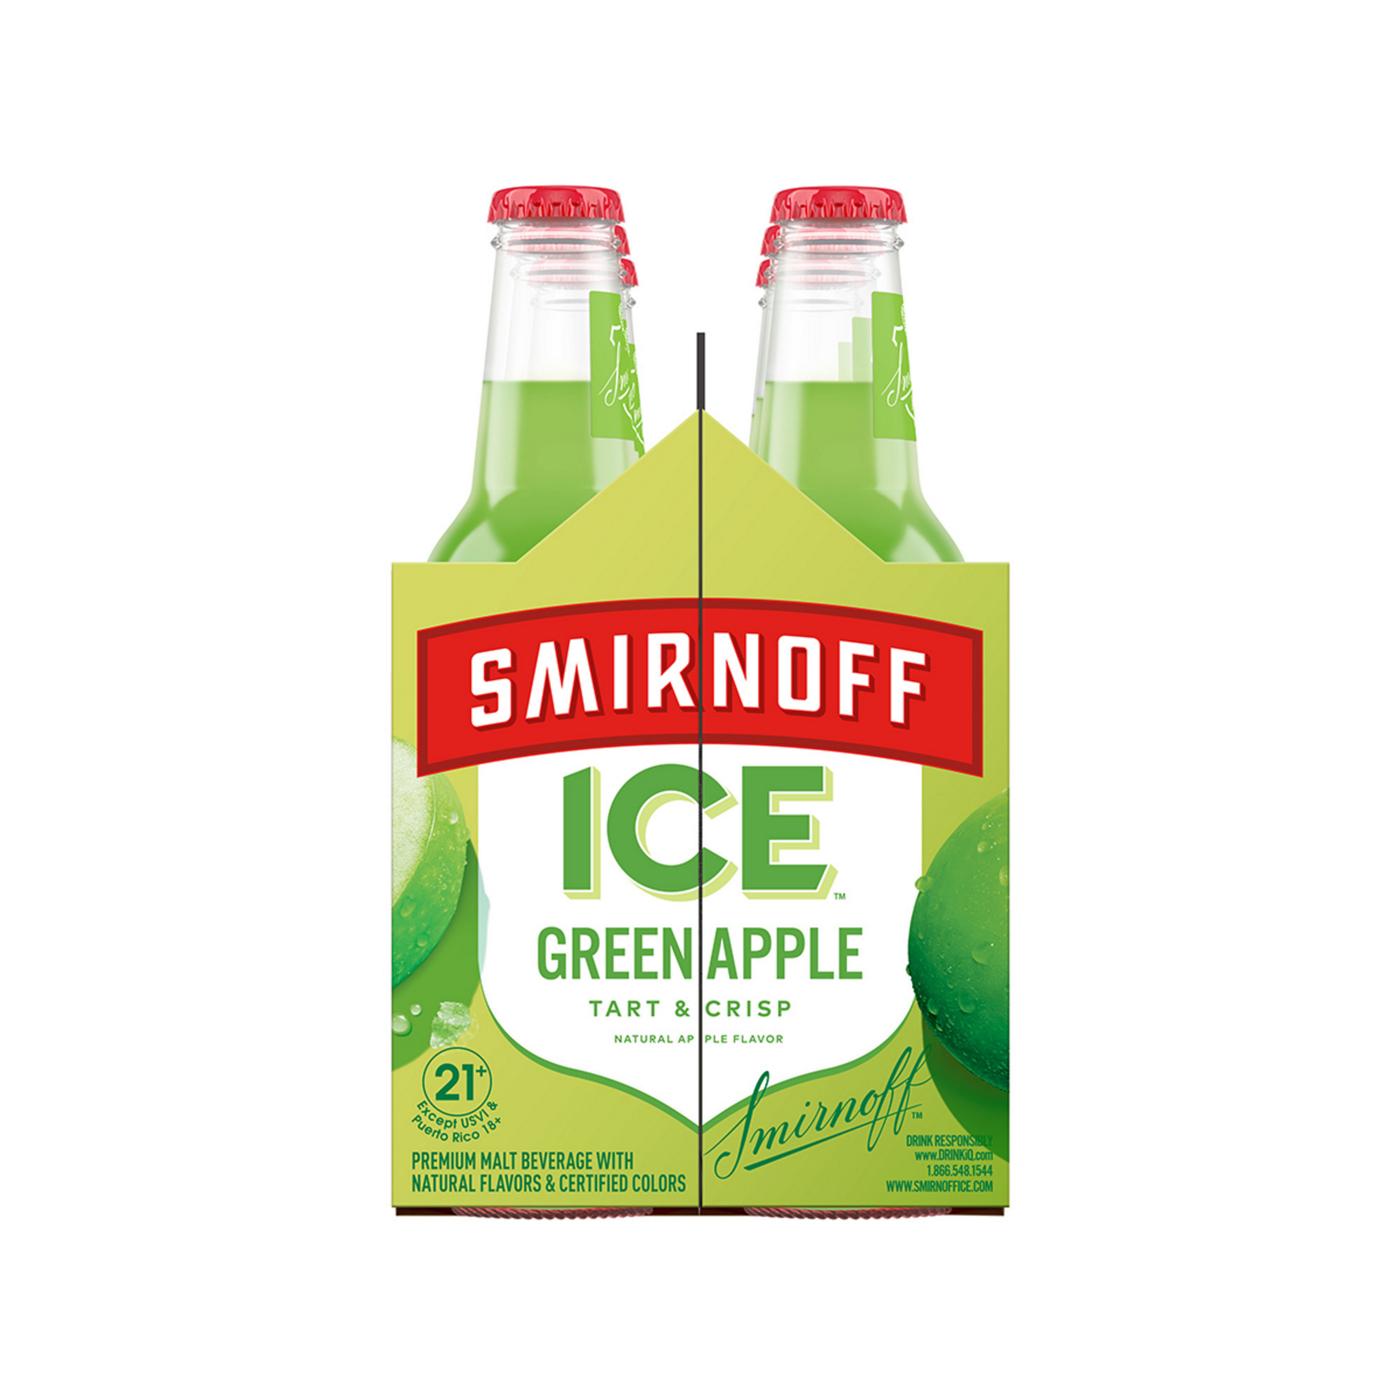 Smirnoff Ice Green Apple; image 5 of 5